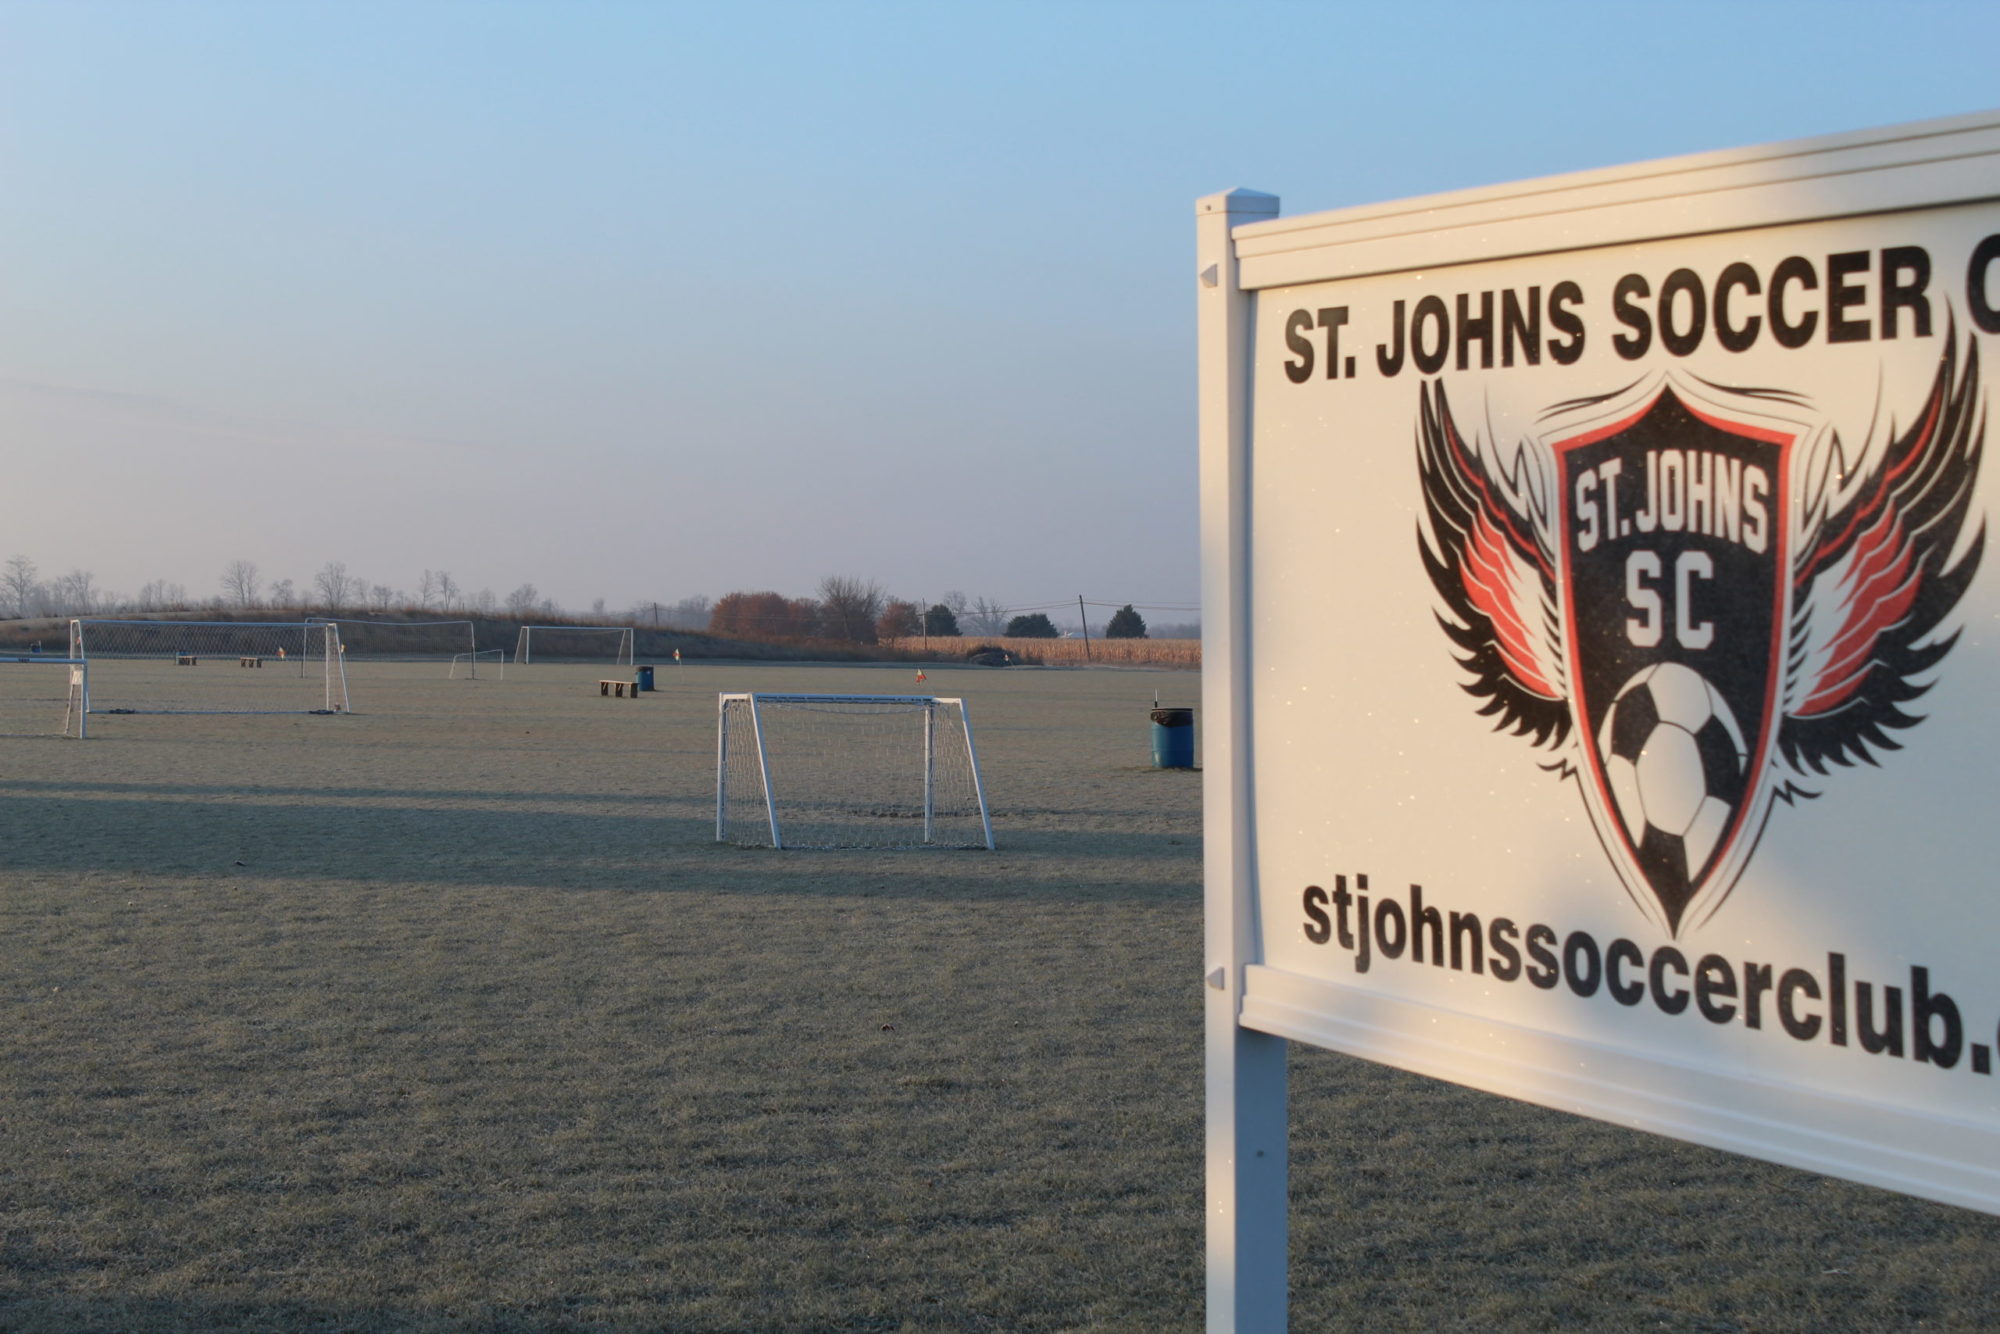 St. Johns Soccer Club, St. Johns Michigan youth soccer.  